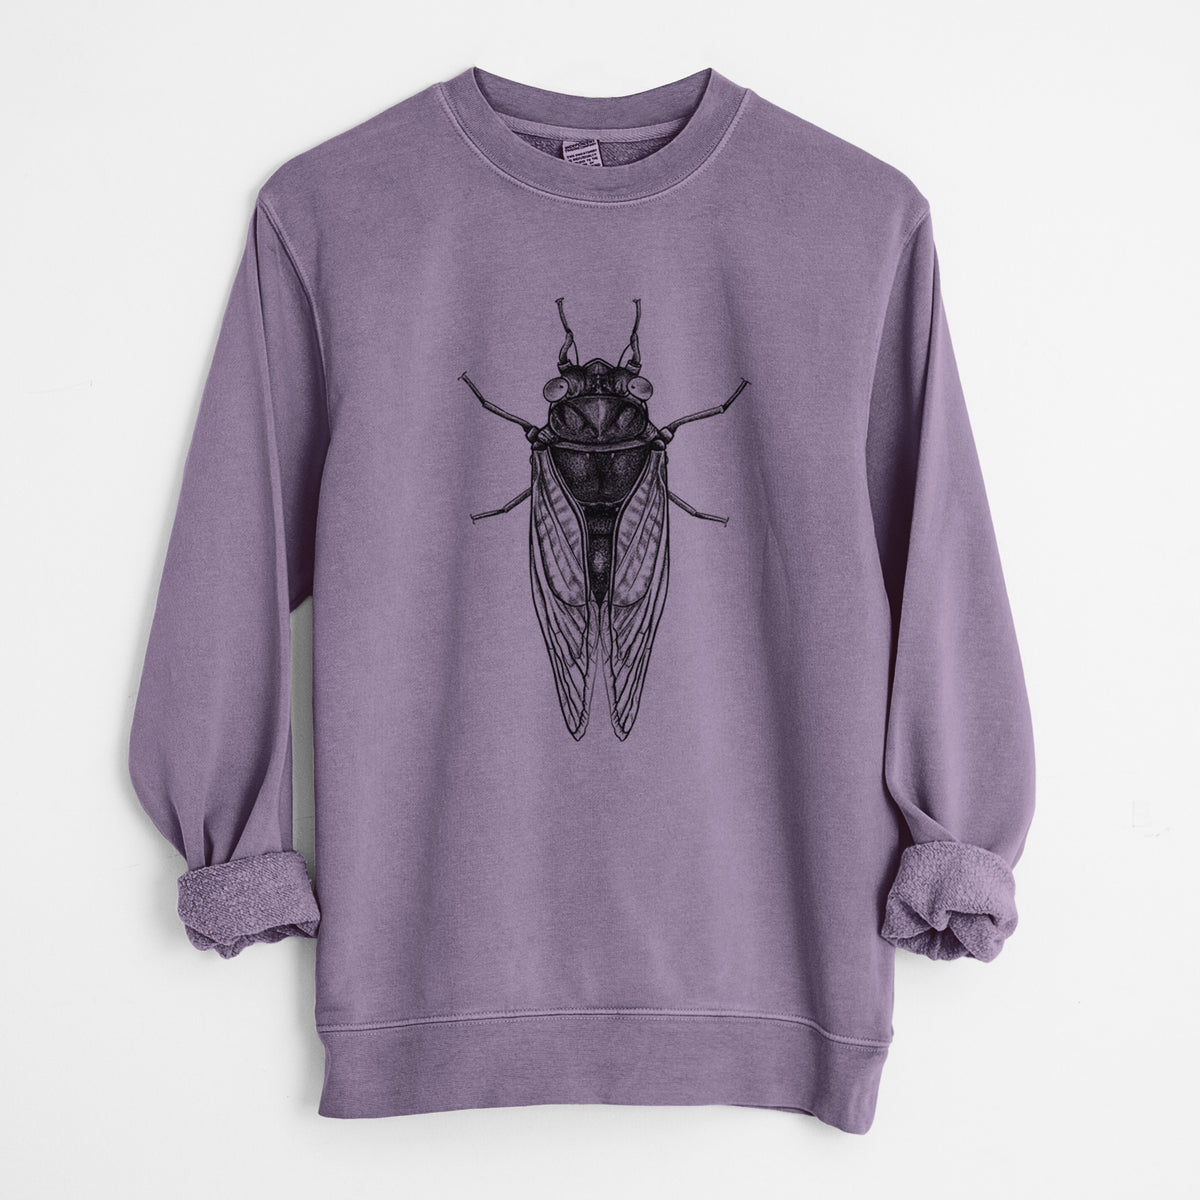 Pharoh Cicada - Magicicada septendecim - Unisex Pigment Dyed Crew Sweatshirt